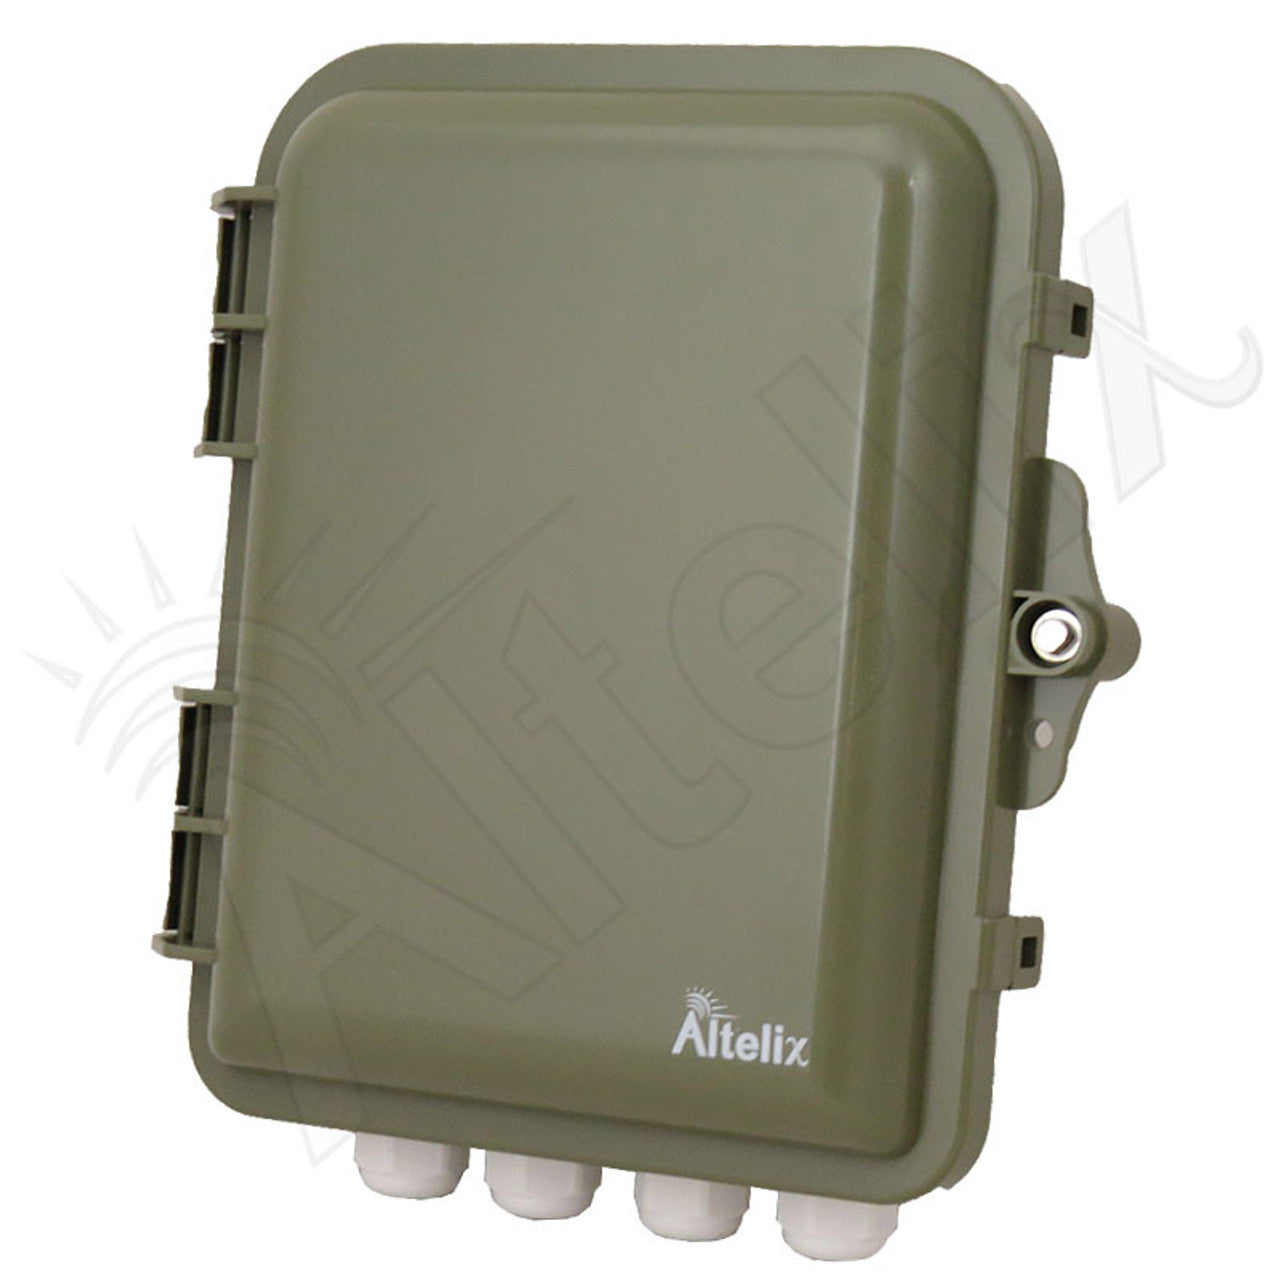 Buy green Altelix 9x8x3 IP66 NEMA 4X PC+ABS Weatherproof Utility Box with Hinged Door and Aluminum Mounting Plate